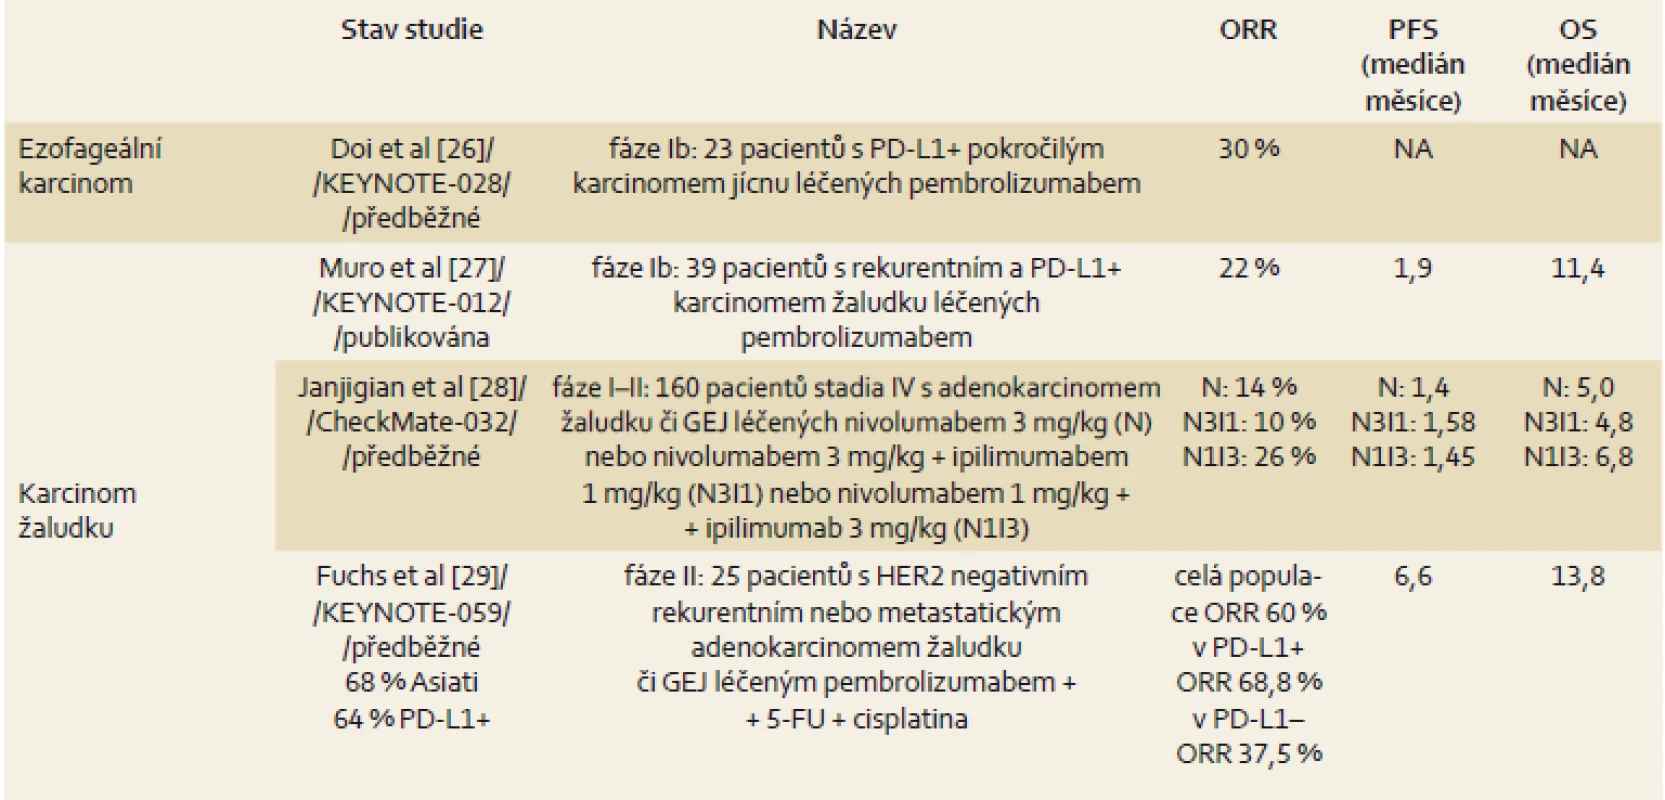 Přehled výsledků léčby u karcinomu jícnu a žaludku.
Tab. 1. Overview of treatment outcomes in oesophageal and gastric cancer.